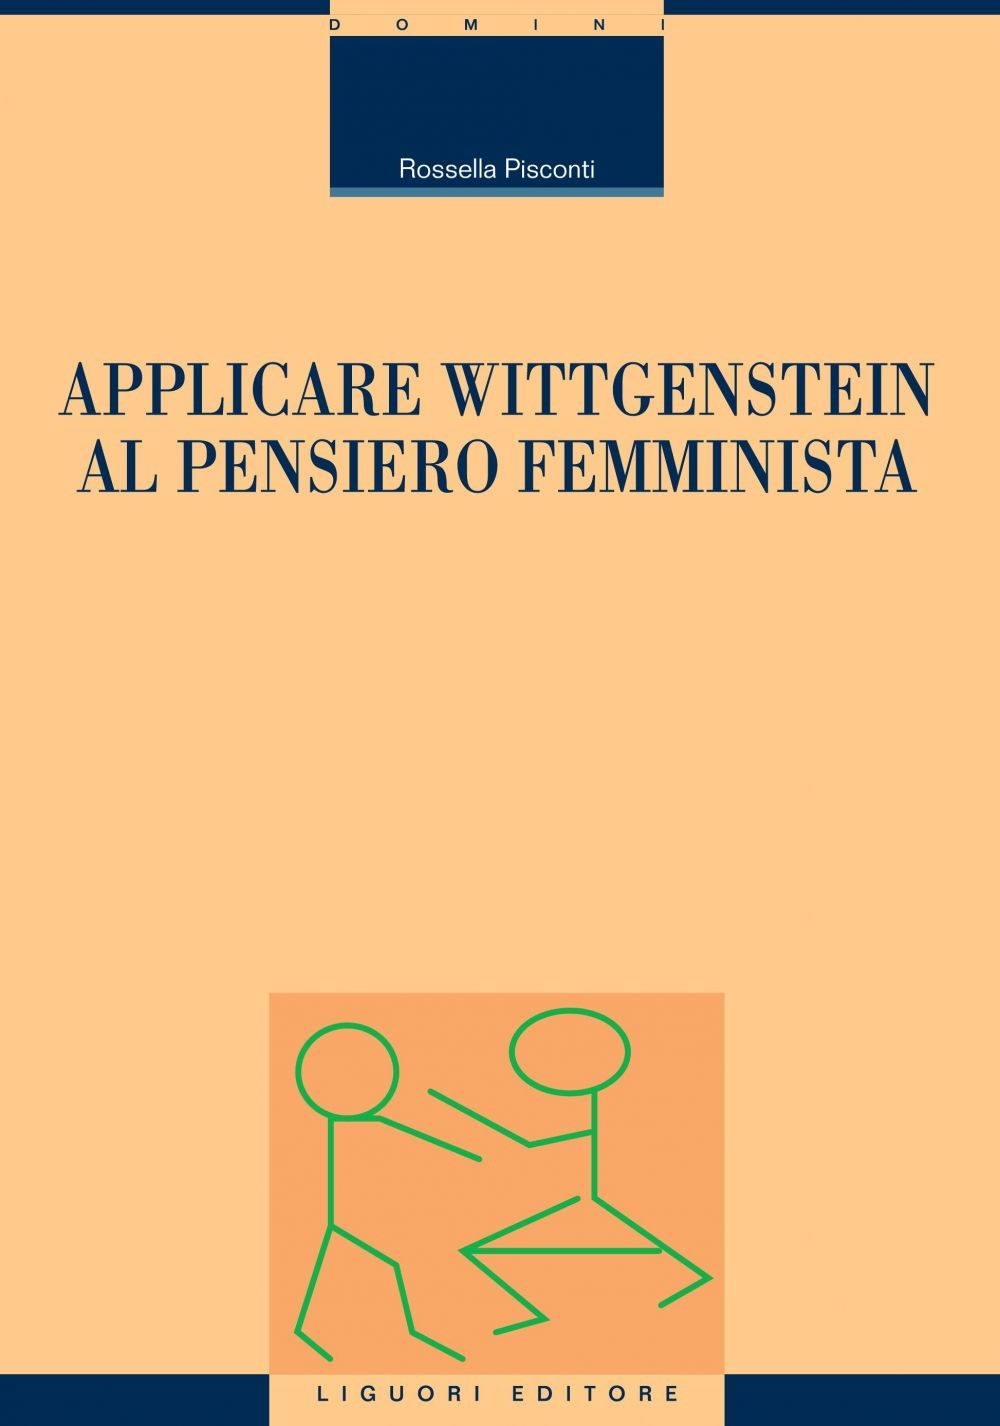 Applicare Wittgenstein al pensiero femminista - Librerie.coop